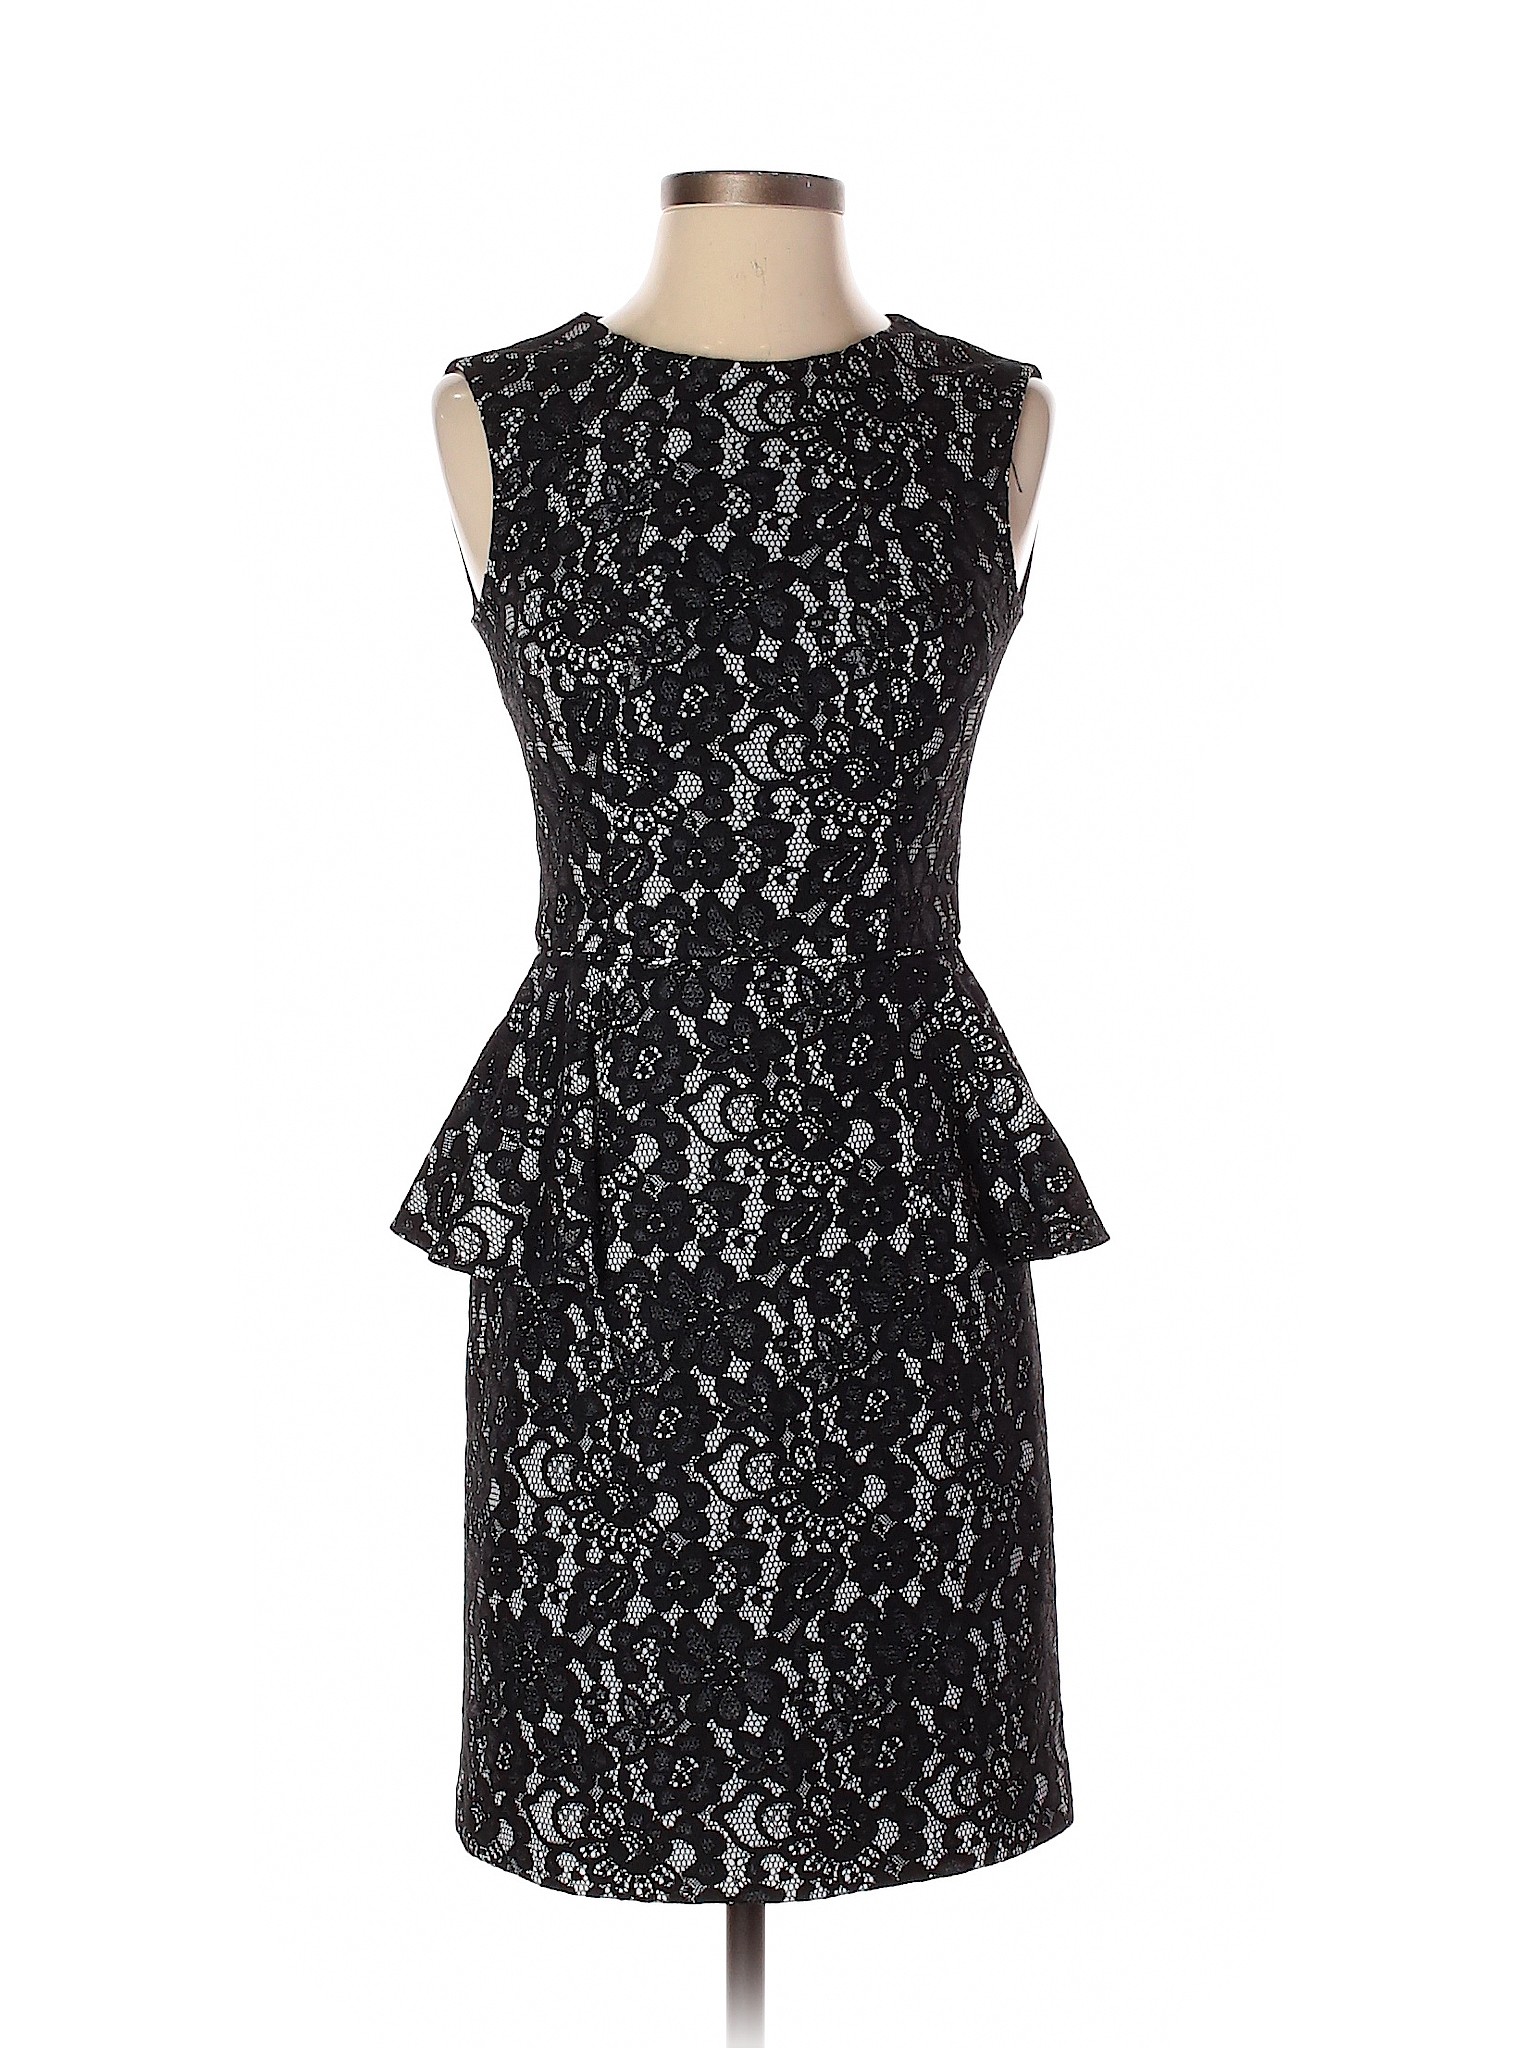 Shoshanna Women Black Cocktail Dress 0 | eBay